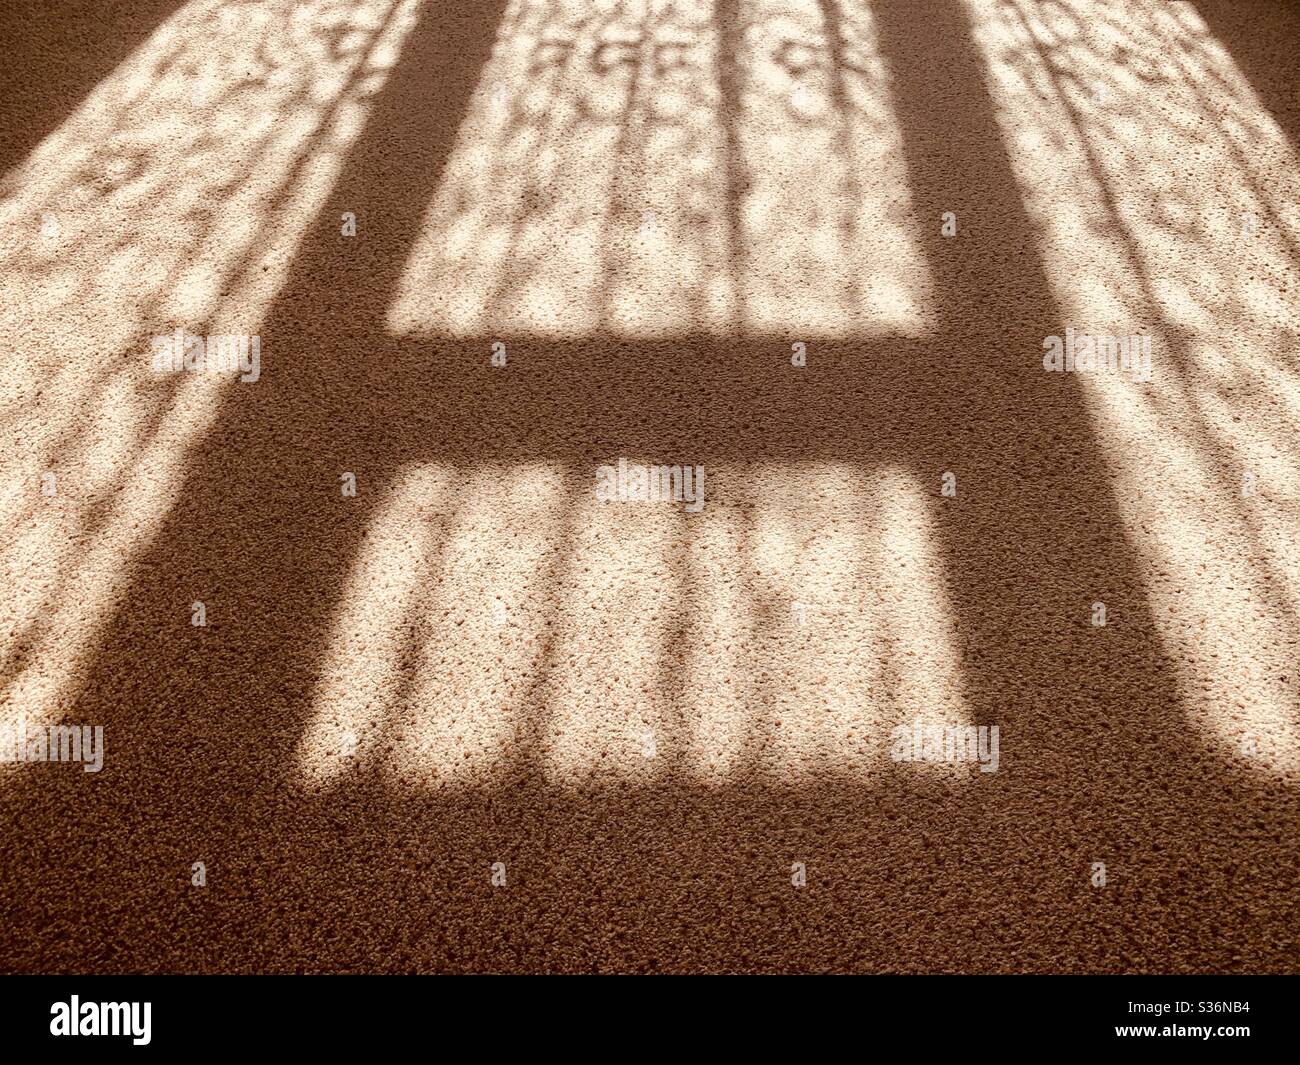 Window shadow on carpet Stock Photo